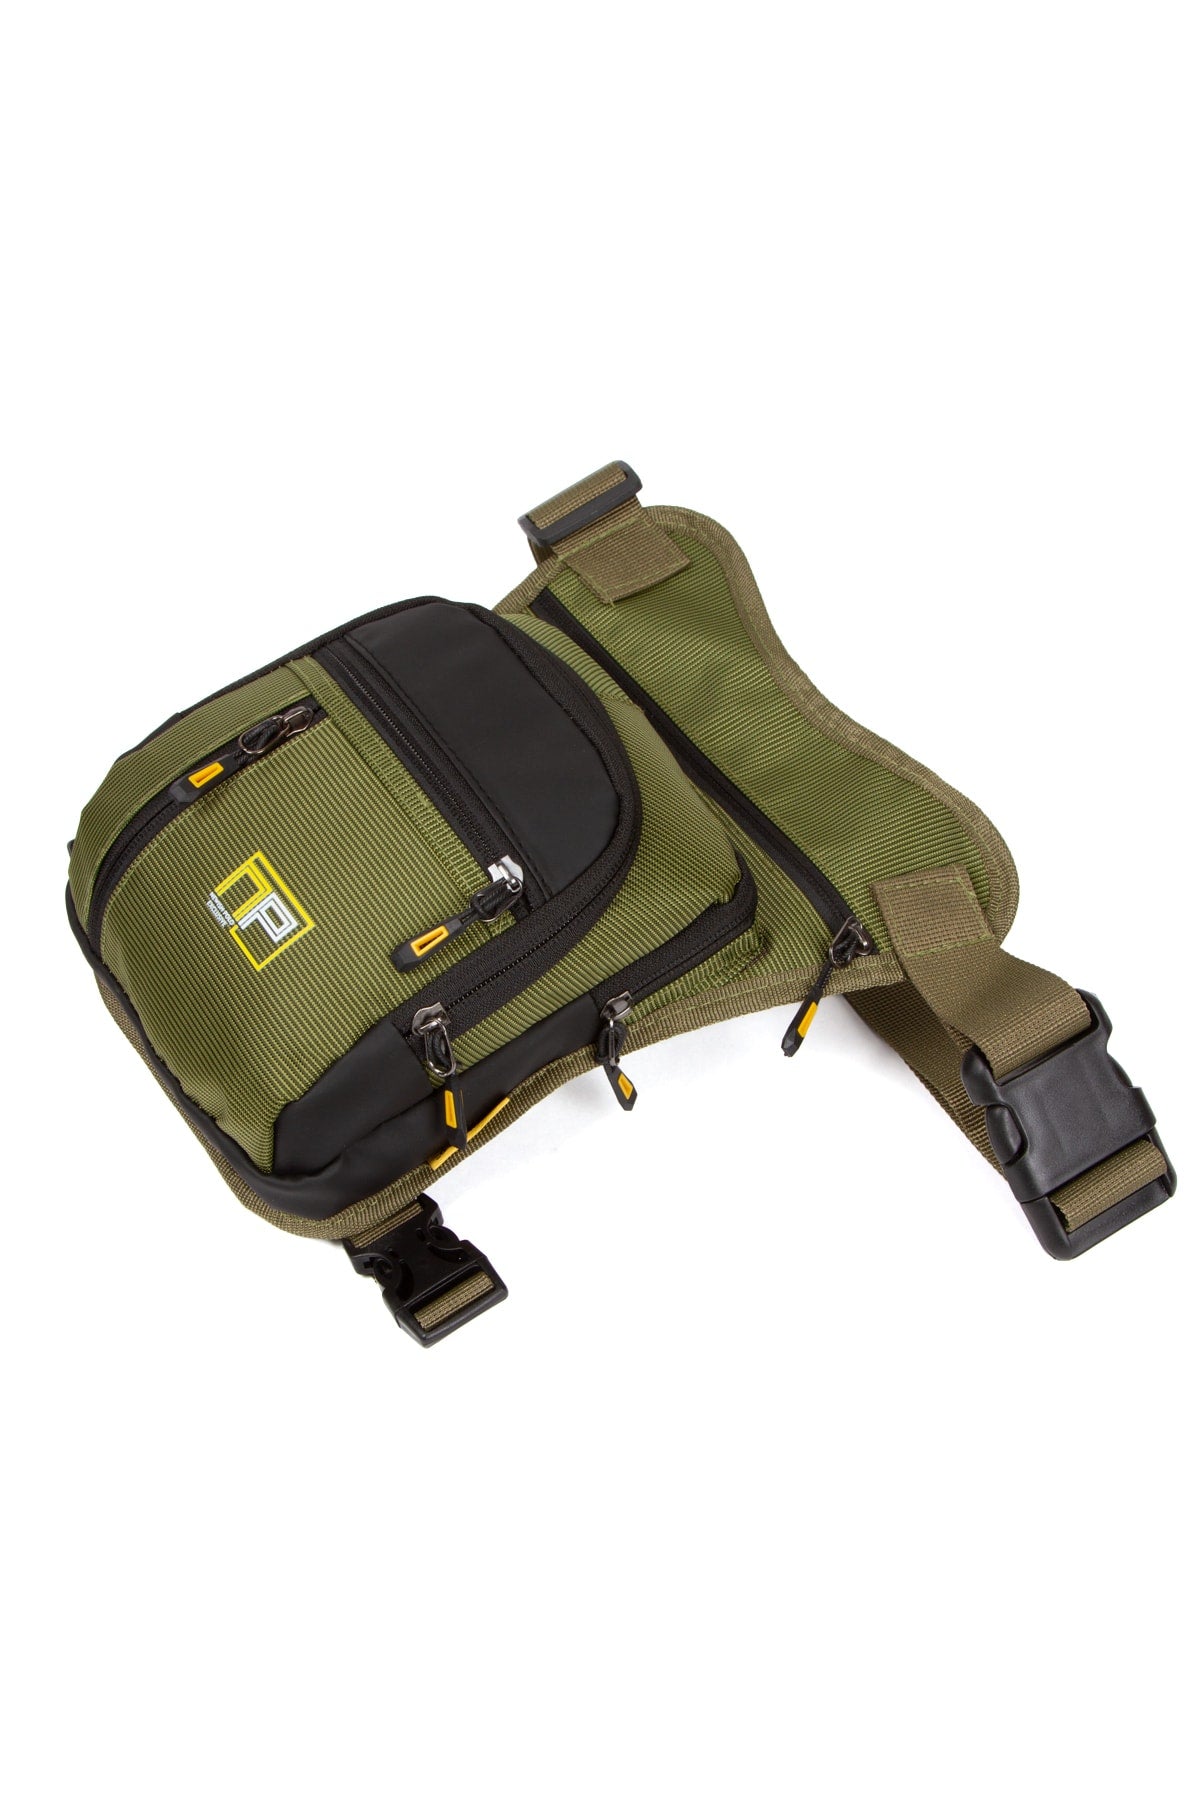 Unisex Impertex Waterproof Fabric Leg Bag , Waist Leg Bag Suitable For Motorcycle Couriers